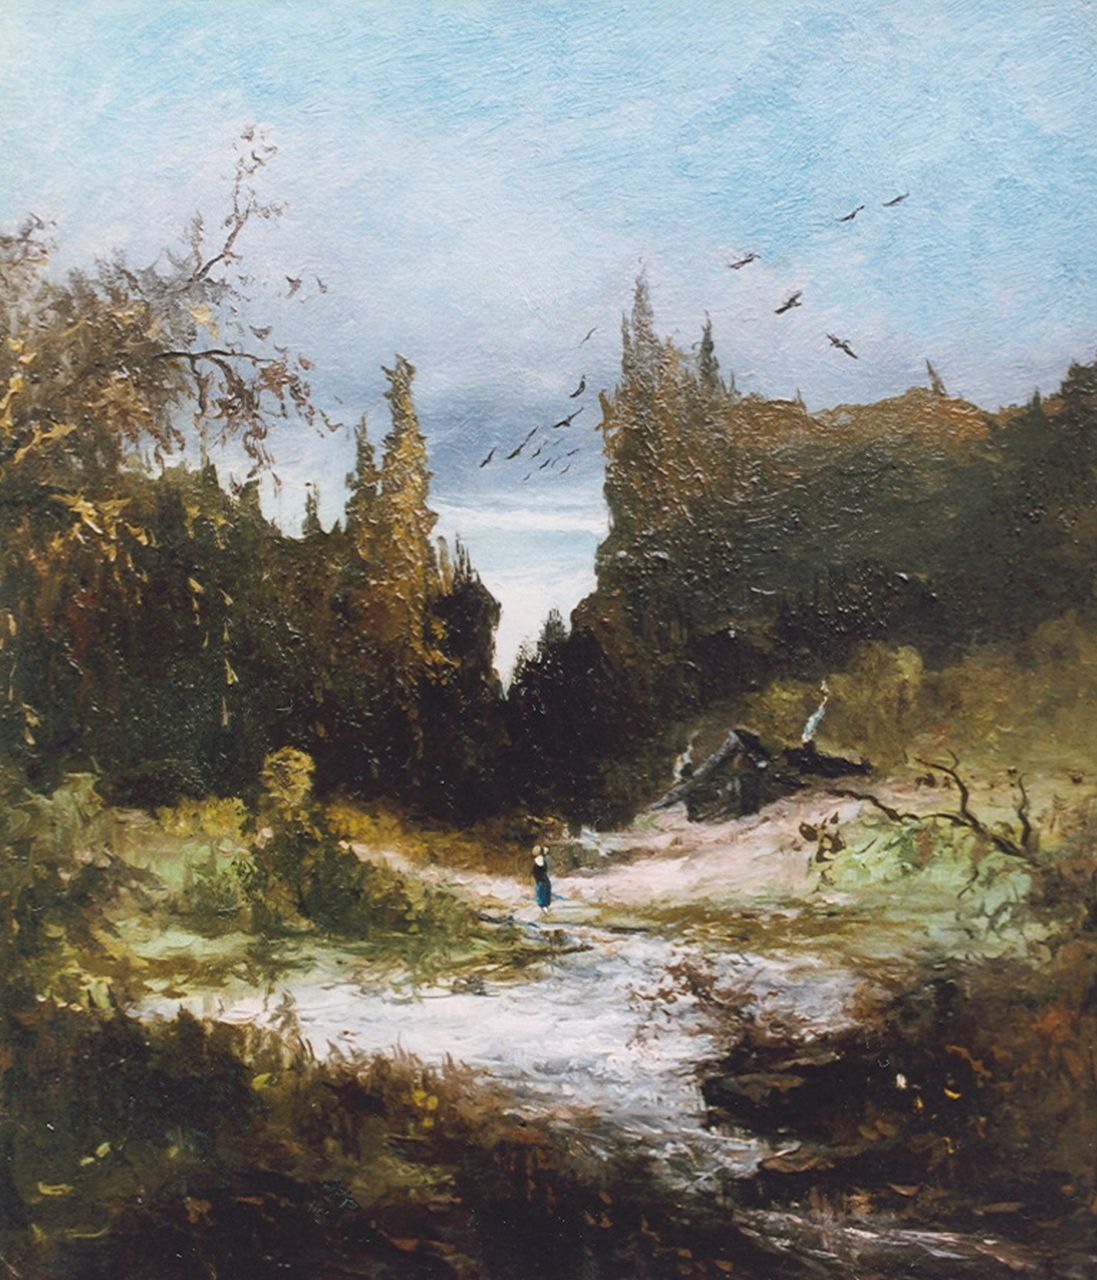 Bilders J.W.  | Johannes Warnardus Bilders, A hilly landscape, Öl auf Malereifaser 31,2 x 27,0 cm